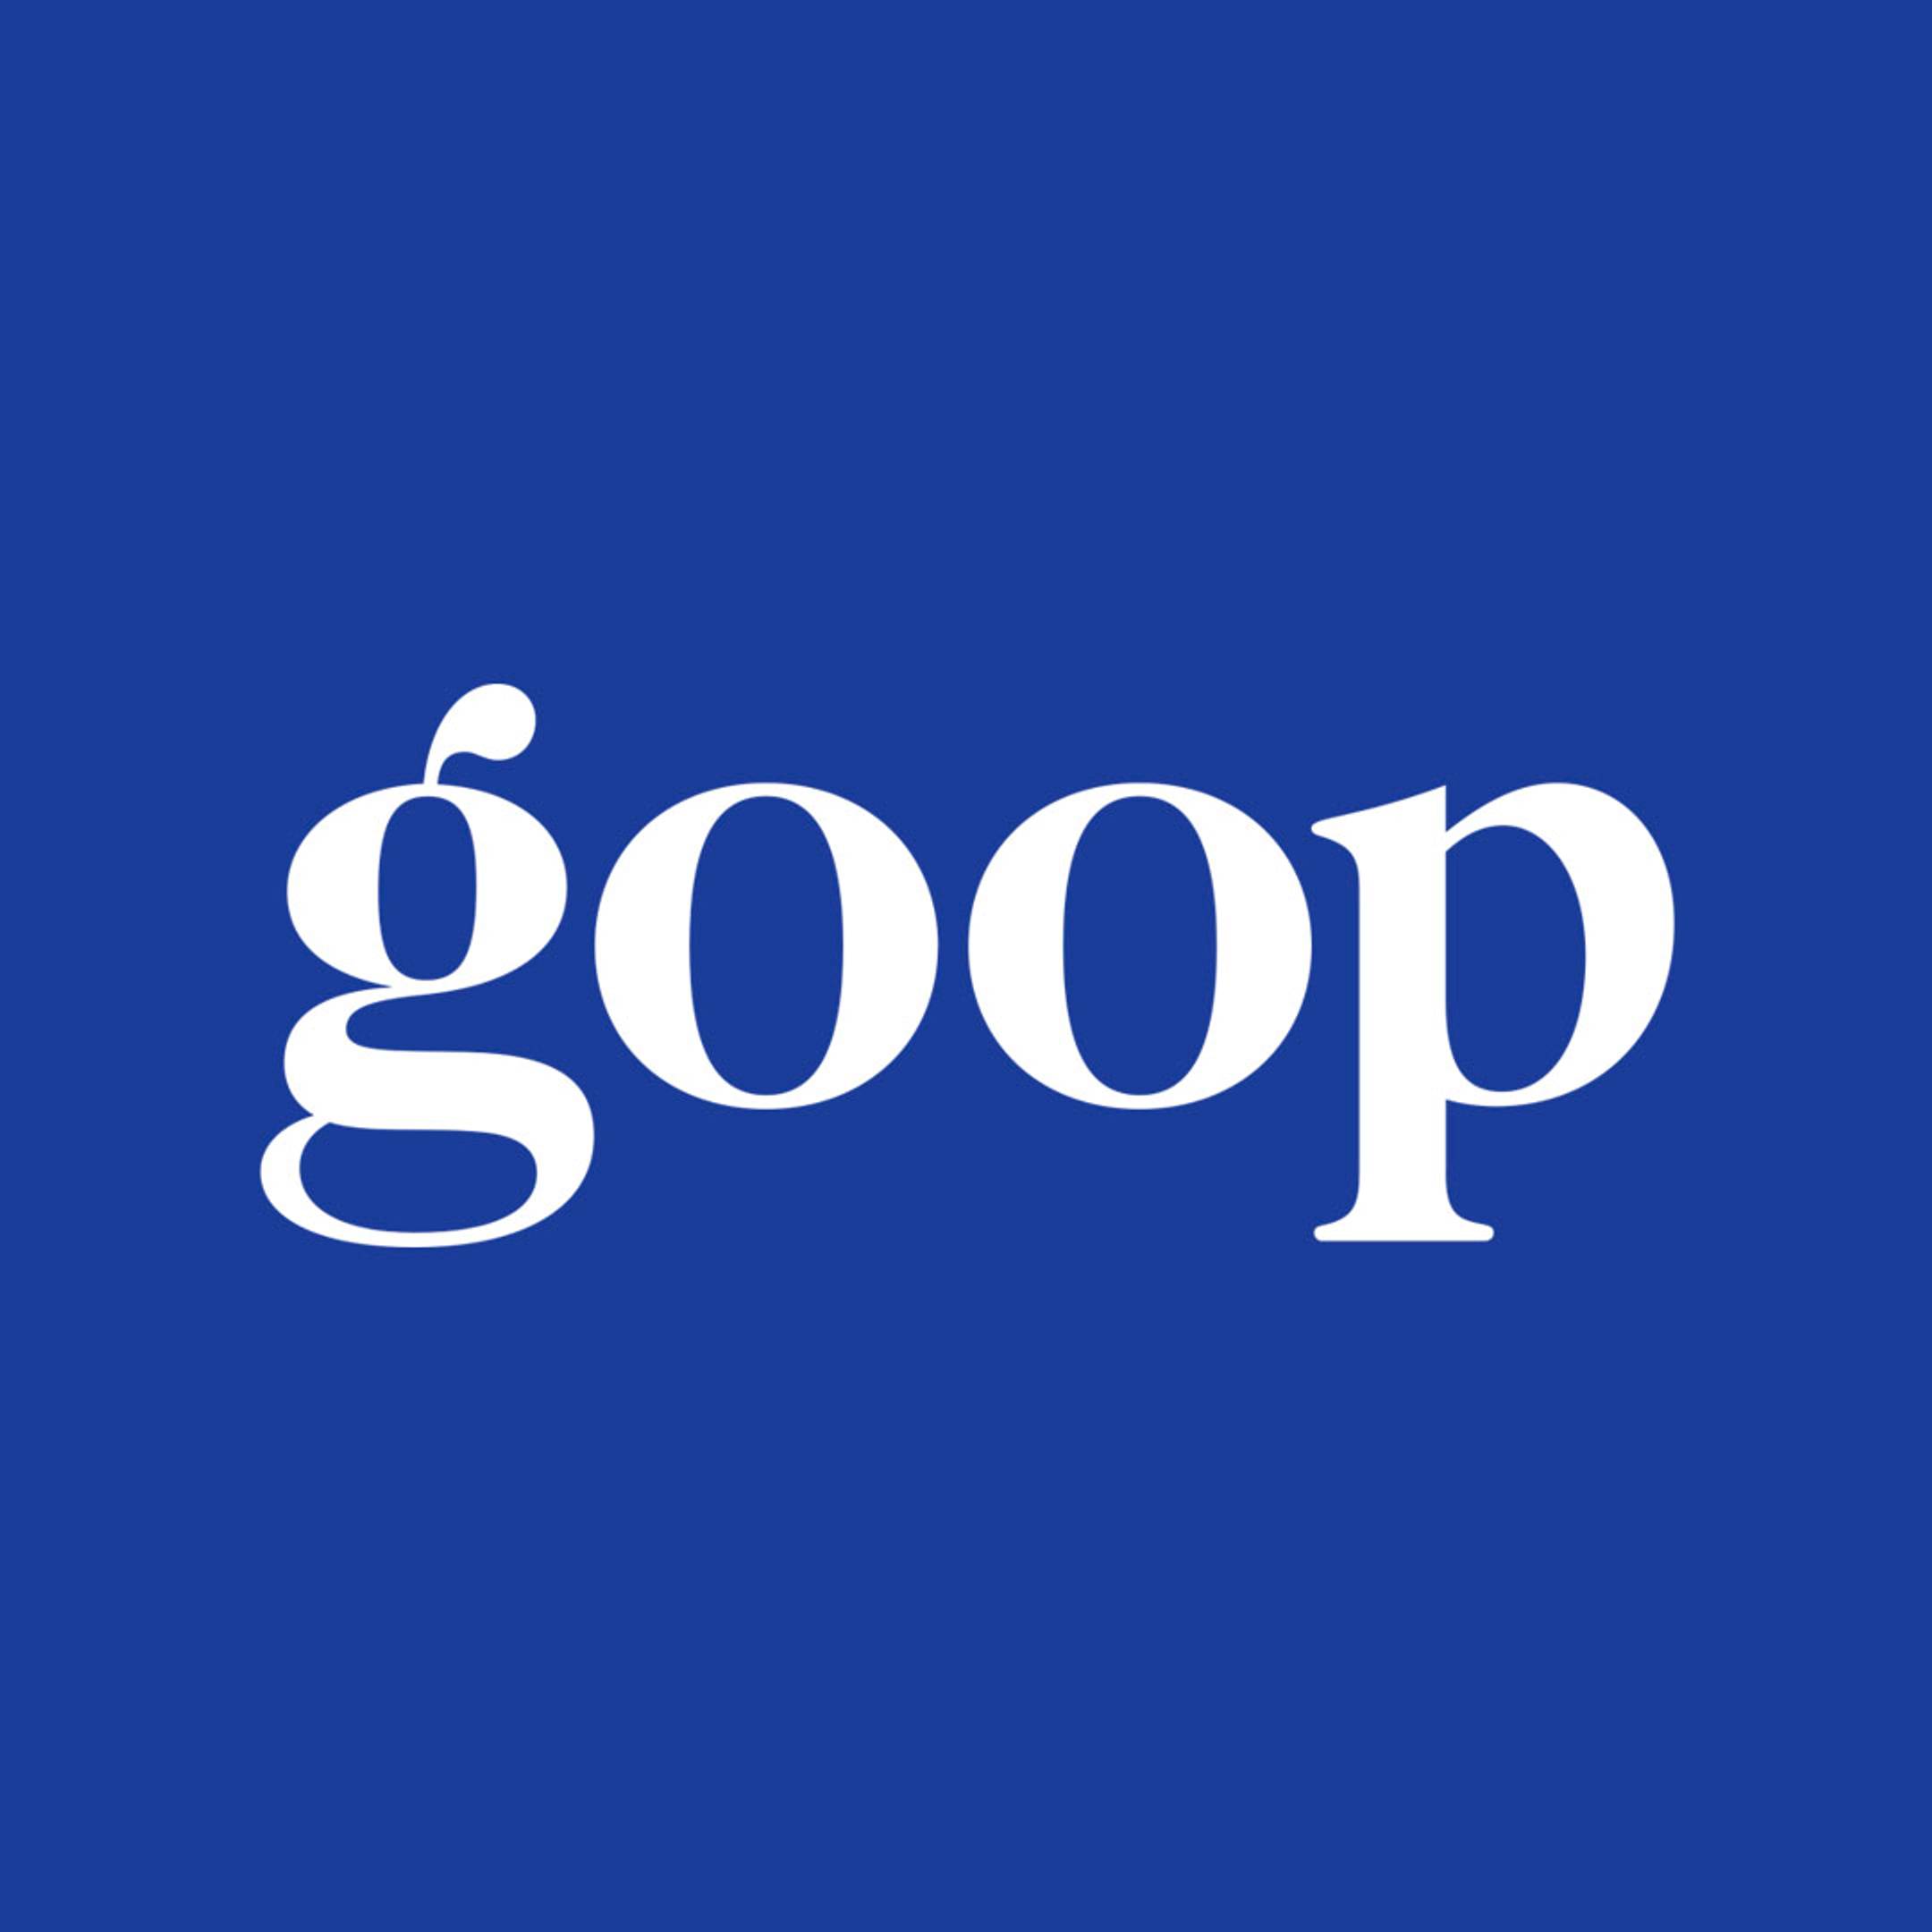 Goop logo on blue background 